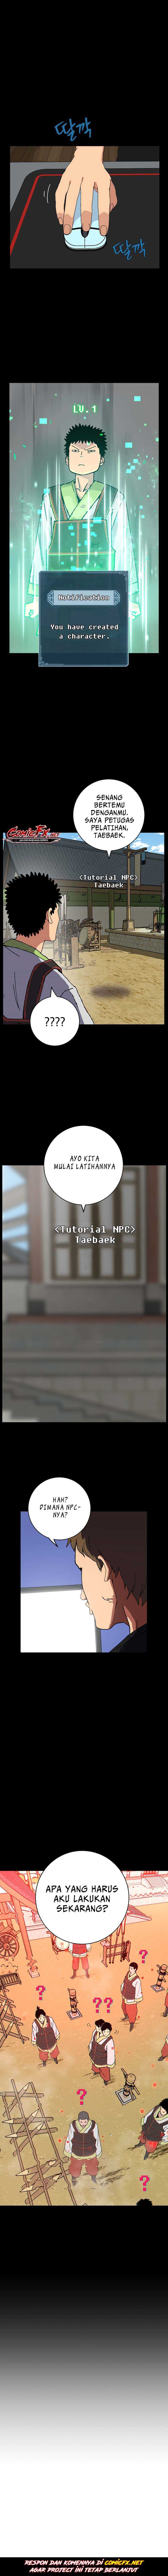 Taebaek: The Tutorial Man Chapter 1